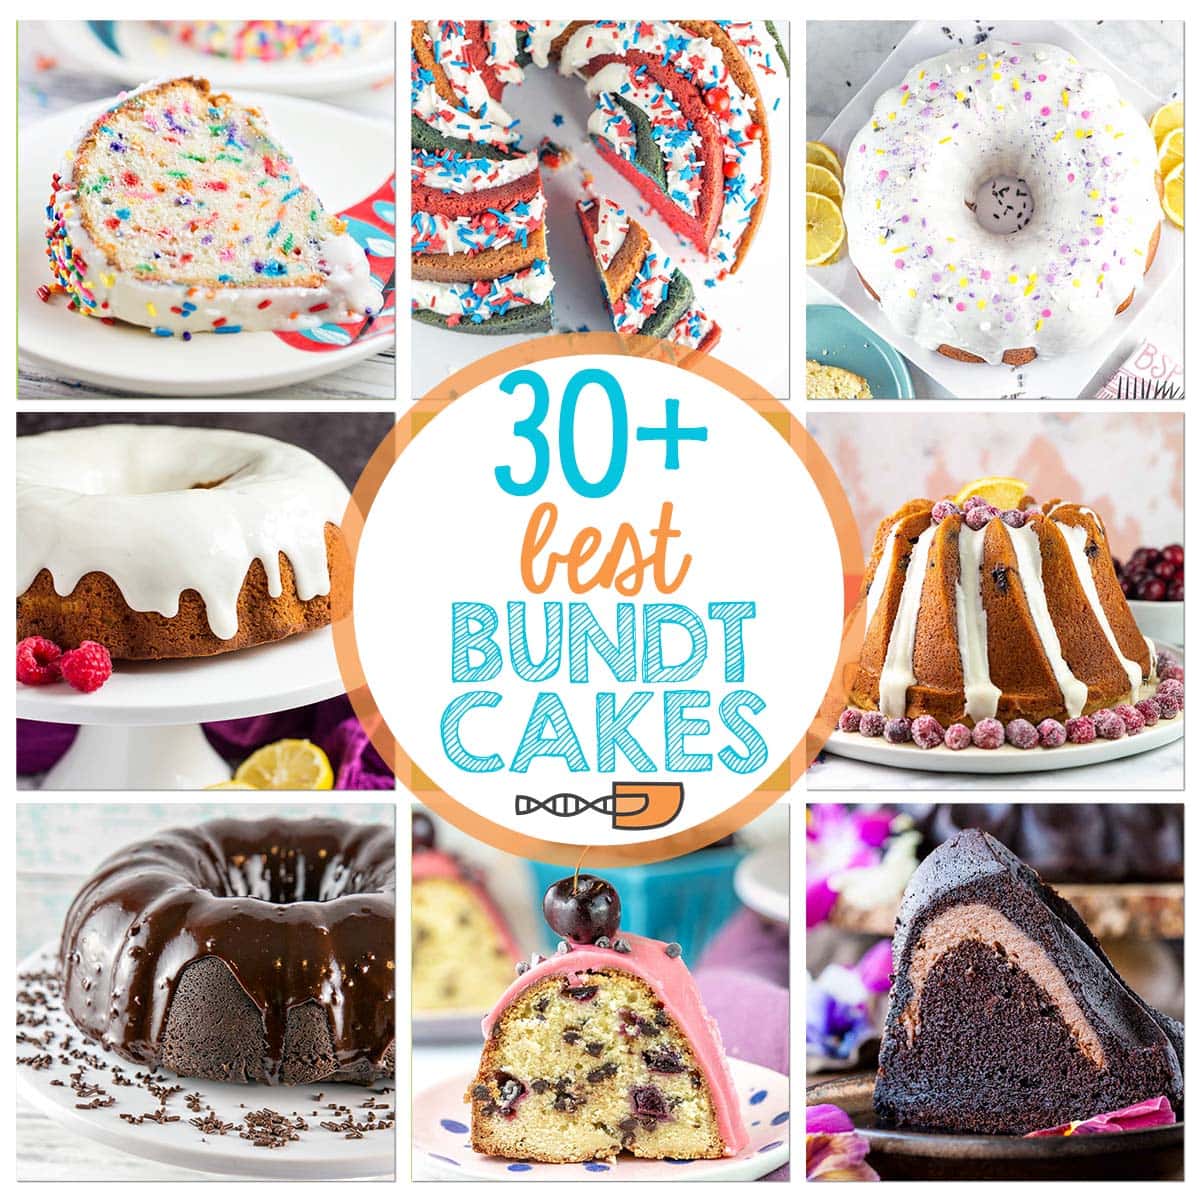 Best Bundt Cakes (+ Essential Bundt Baking Tips)